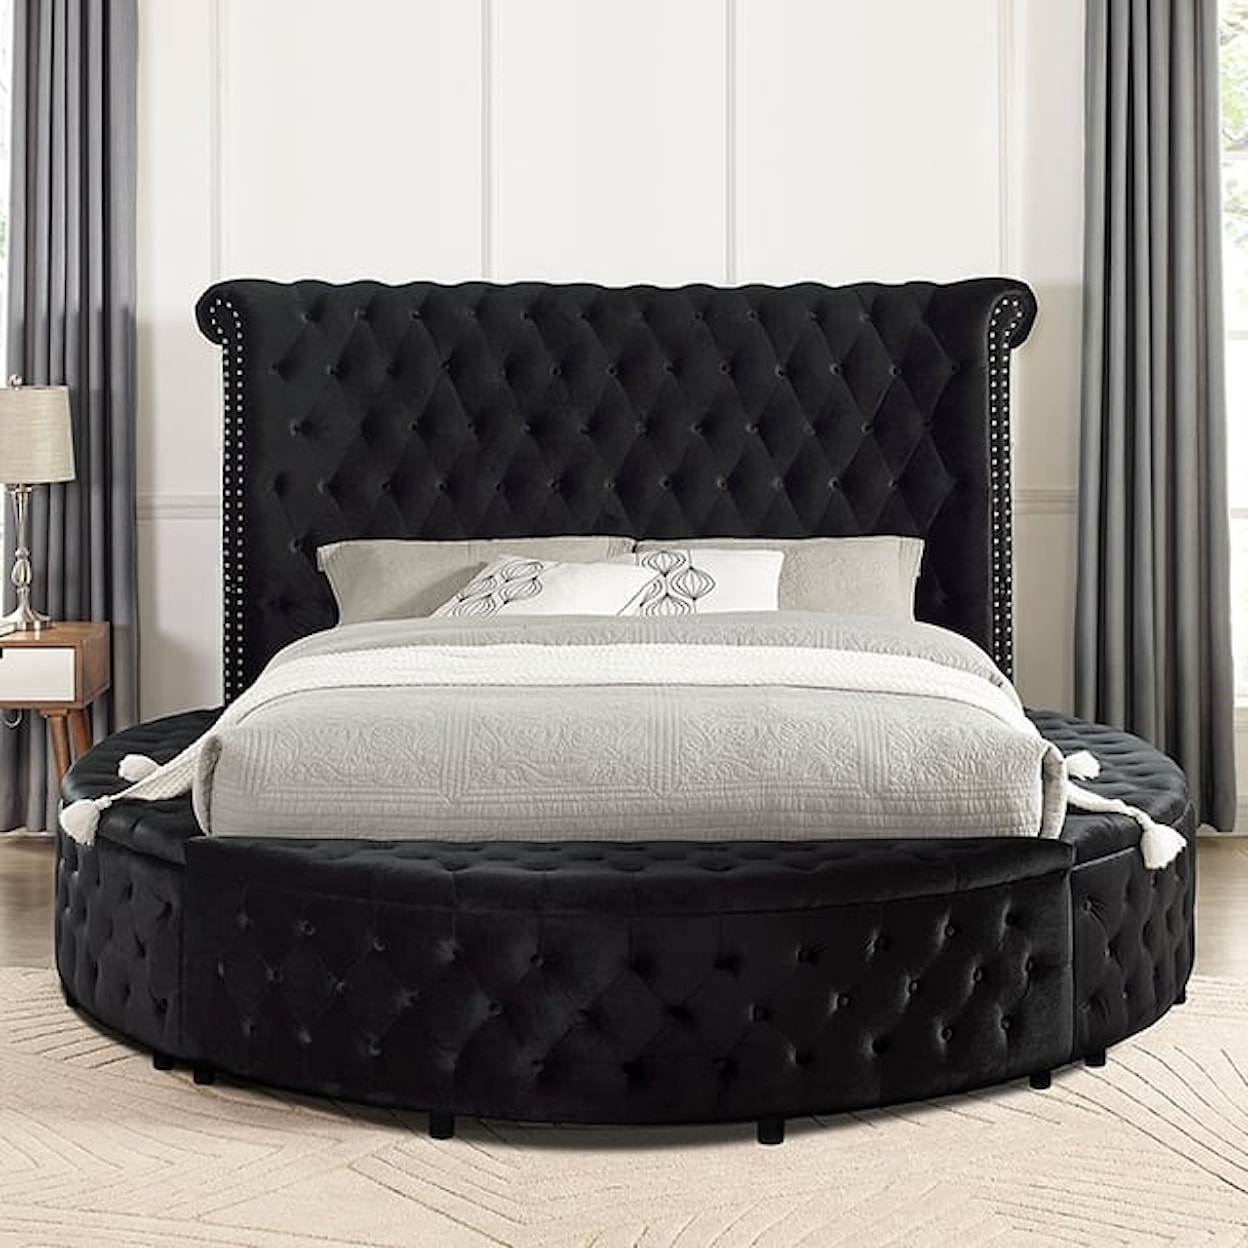 Furniture of America Sansom Cali. King Upholstered Round Bed